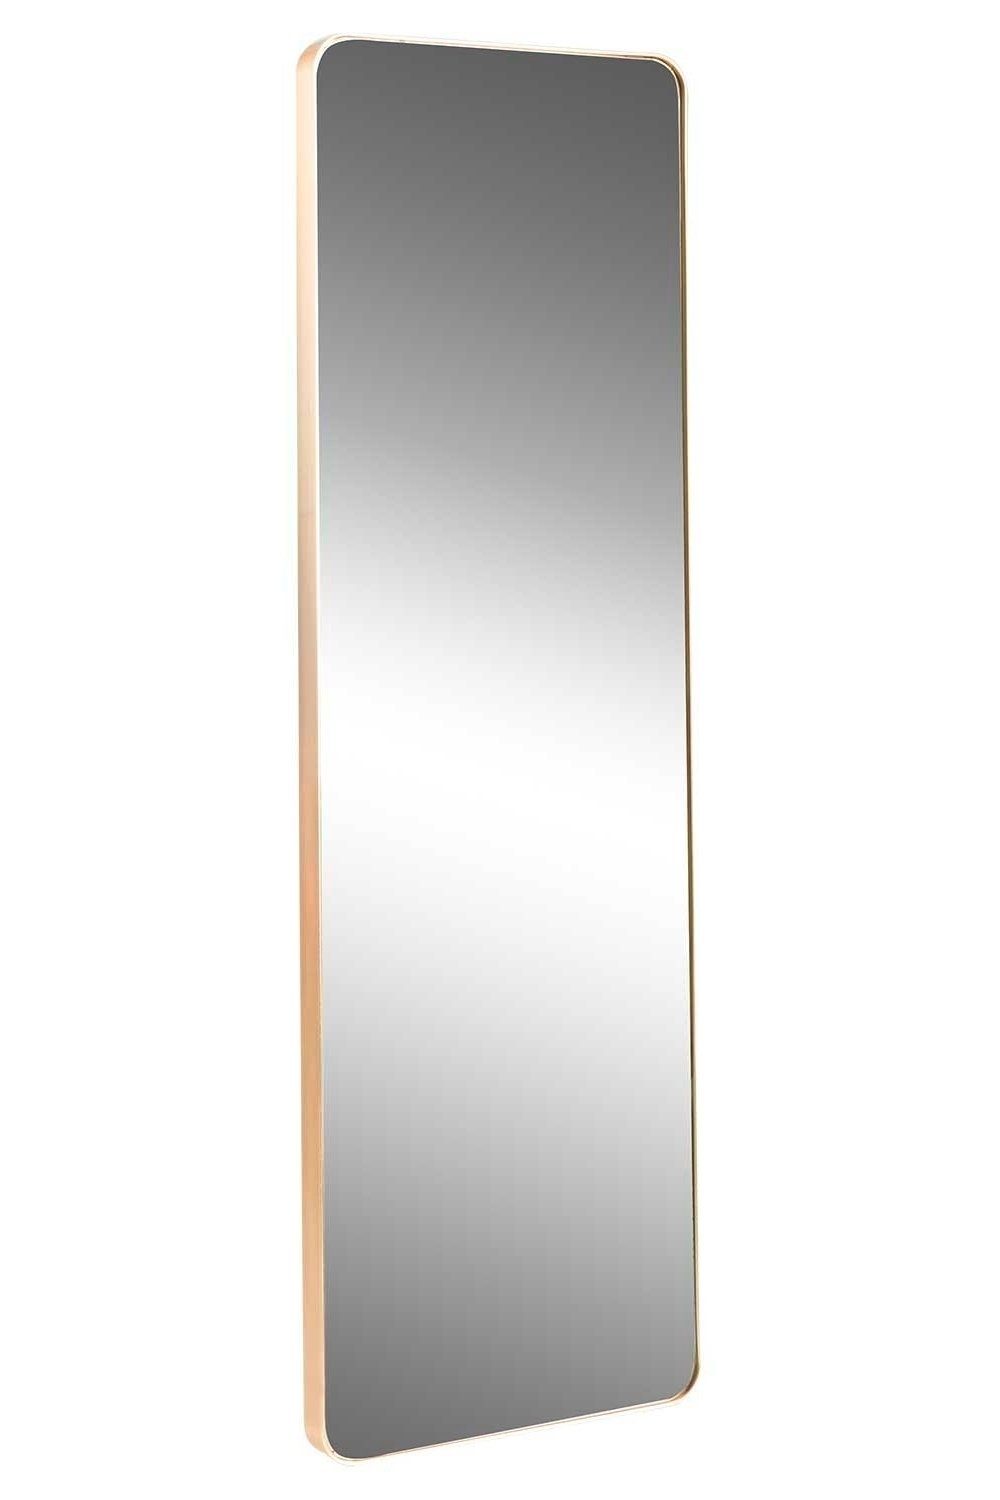 Home4You Spiegel TAINA, 30 Rahmen 100 Metall, x H cm, Rahmenoberfläche B in lackierte Goldfarben